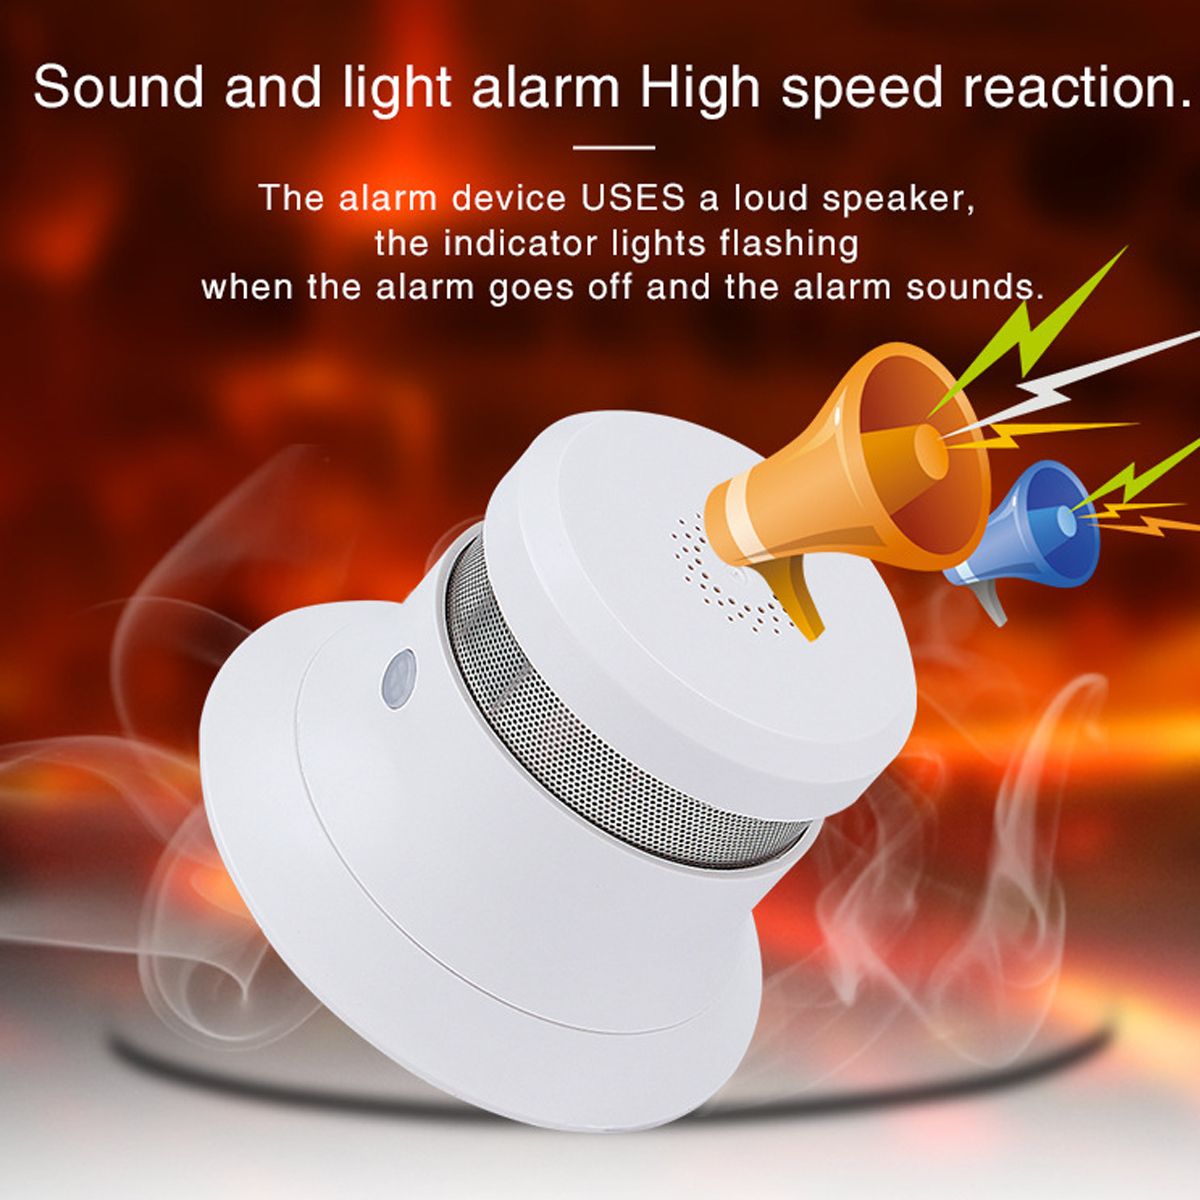 Smoke-Alarm-Detector-Sensor-Hoisting-Mounted-Wall-Mounted-Fire-Sound-Alarm-1468319